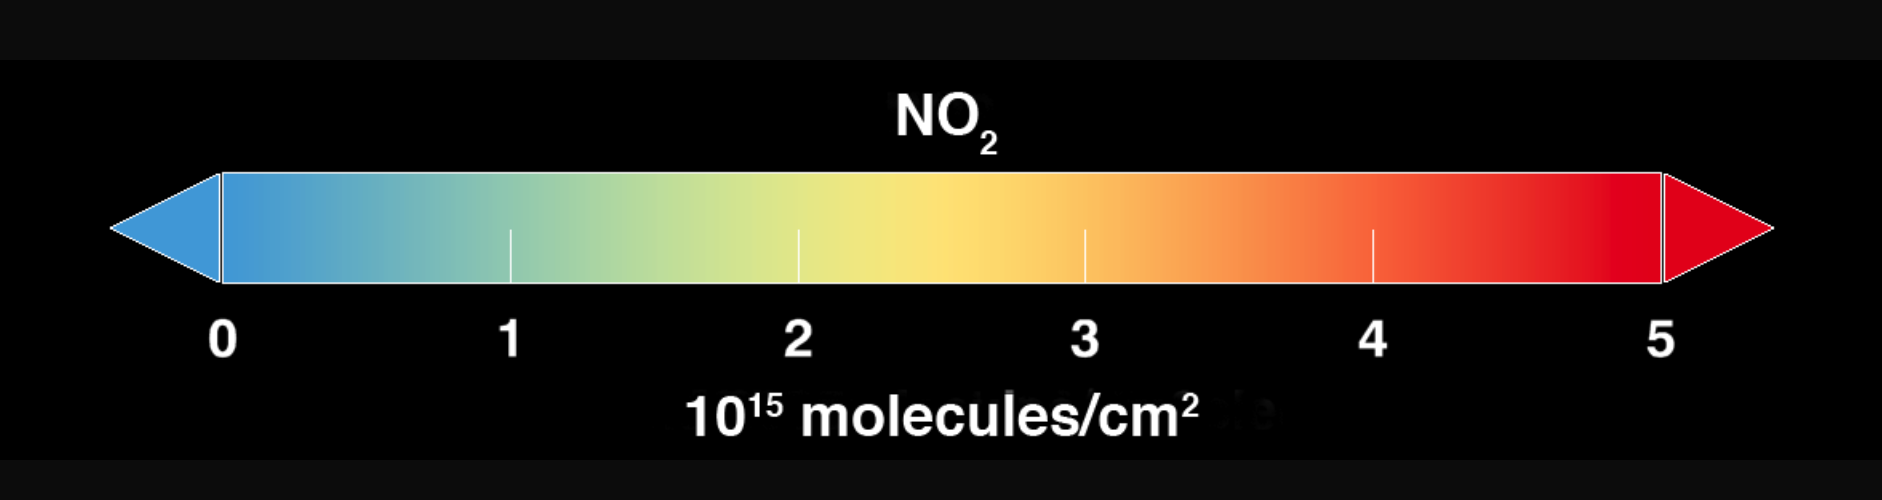 Color bar for absolute nitrogen dioxide concentrations global images.